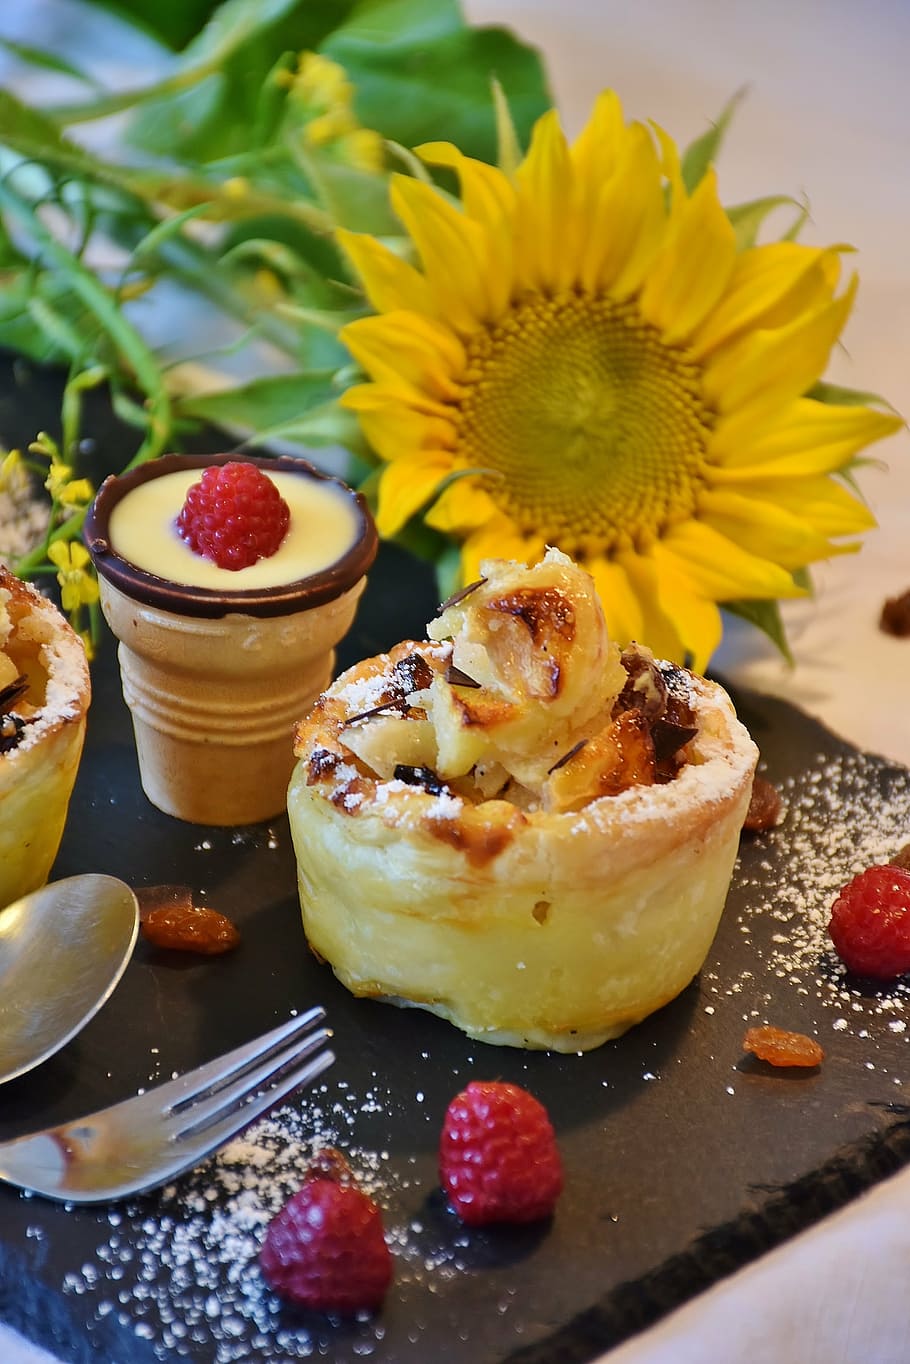 sunflower and rasberry on plate, strudel, apple strudel, apple muffin, HD wallpaper